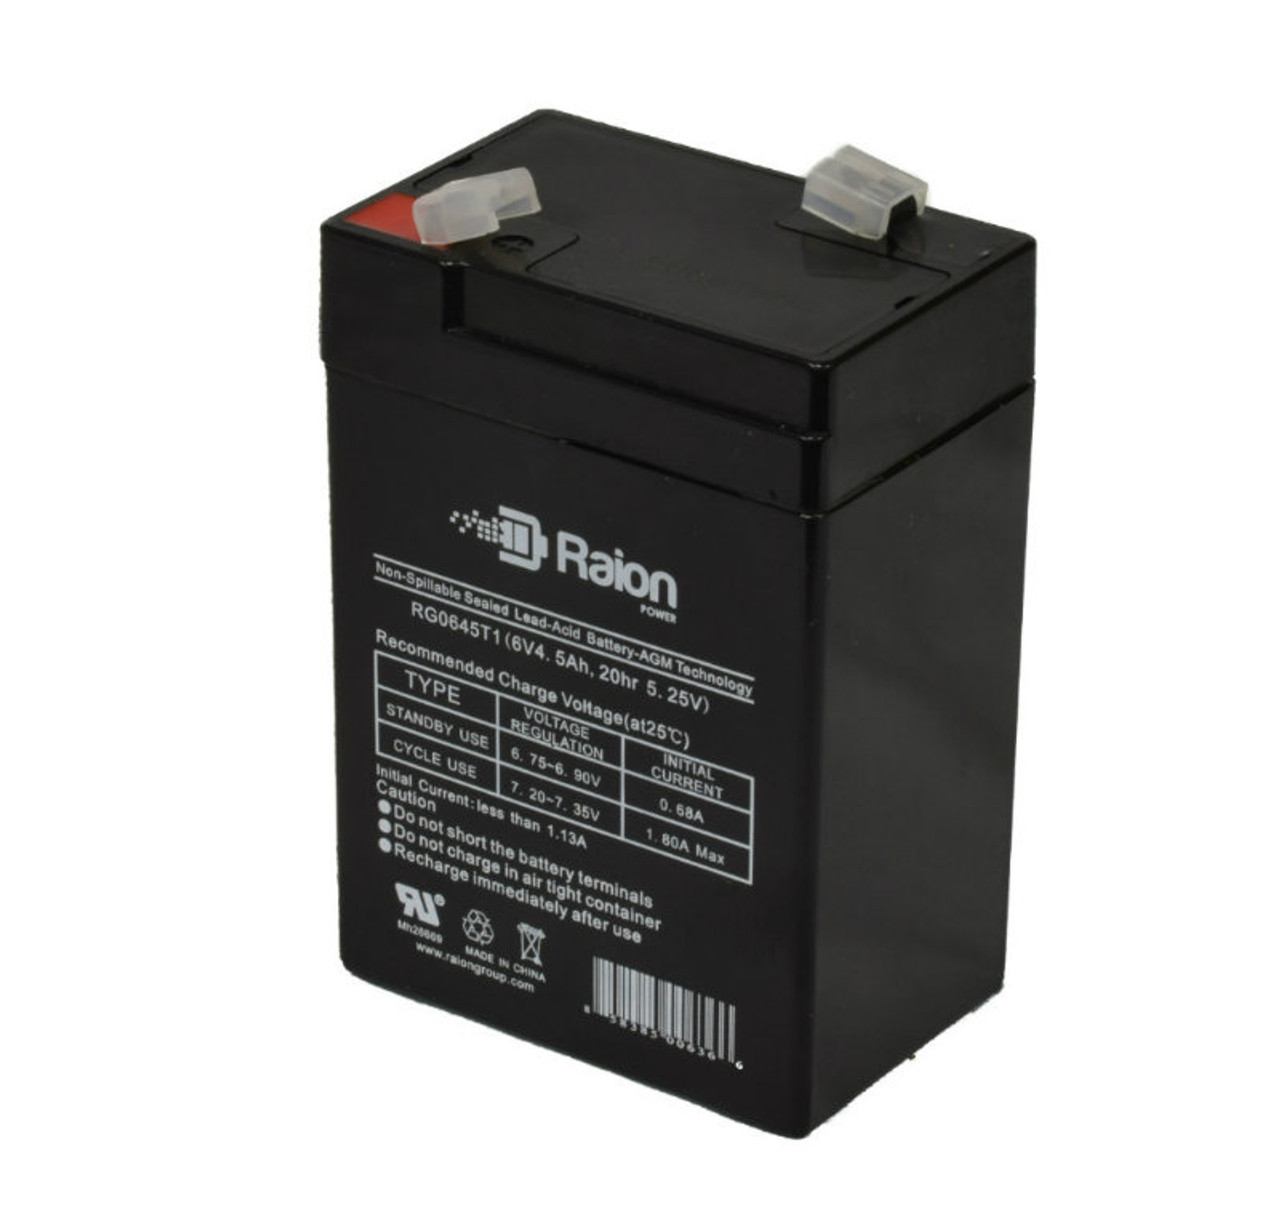 Raion Power RG0645T1 6V 4.5Ah Replacement Battery Cartridge for XYC XT660